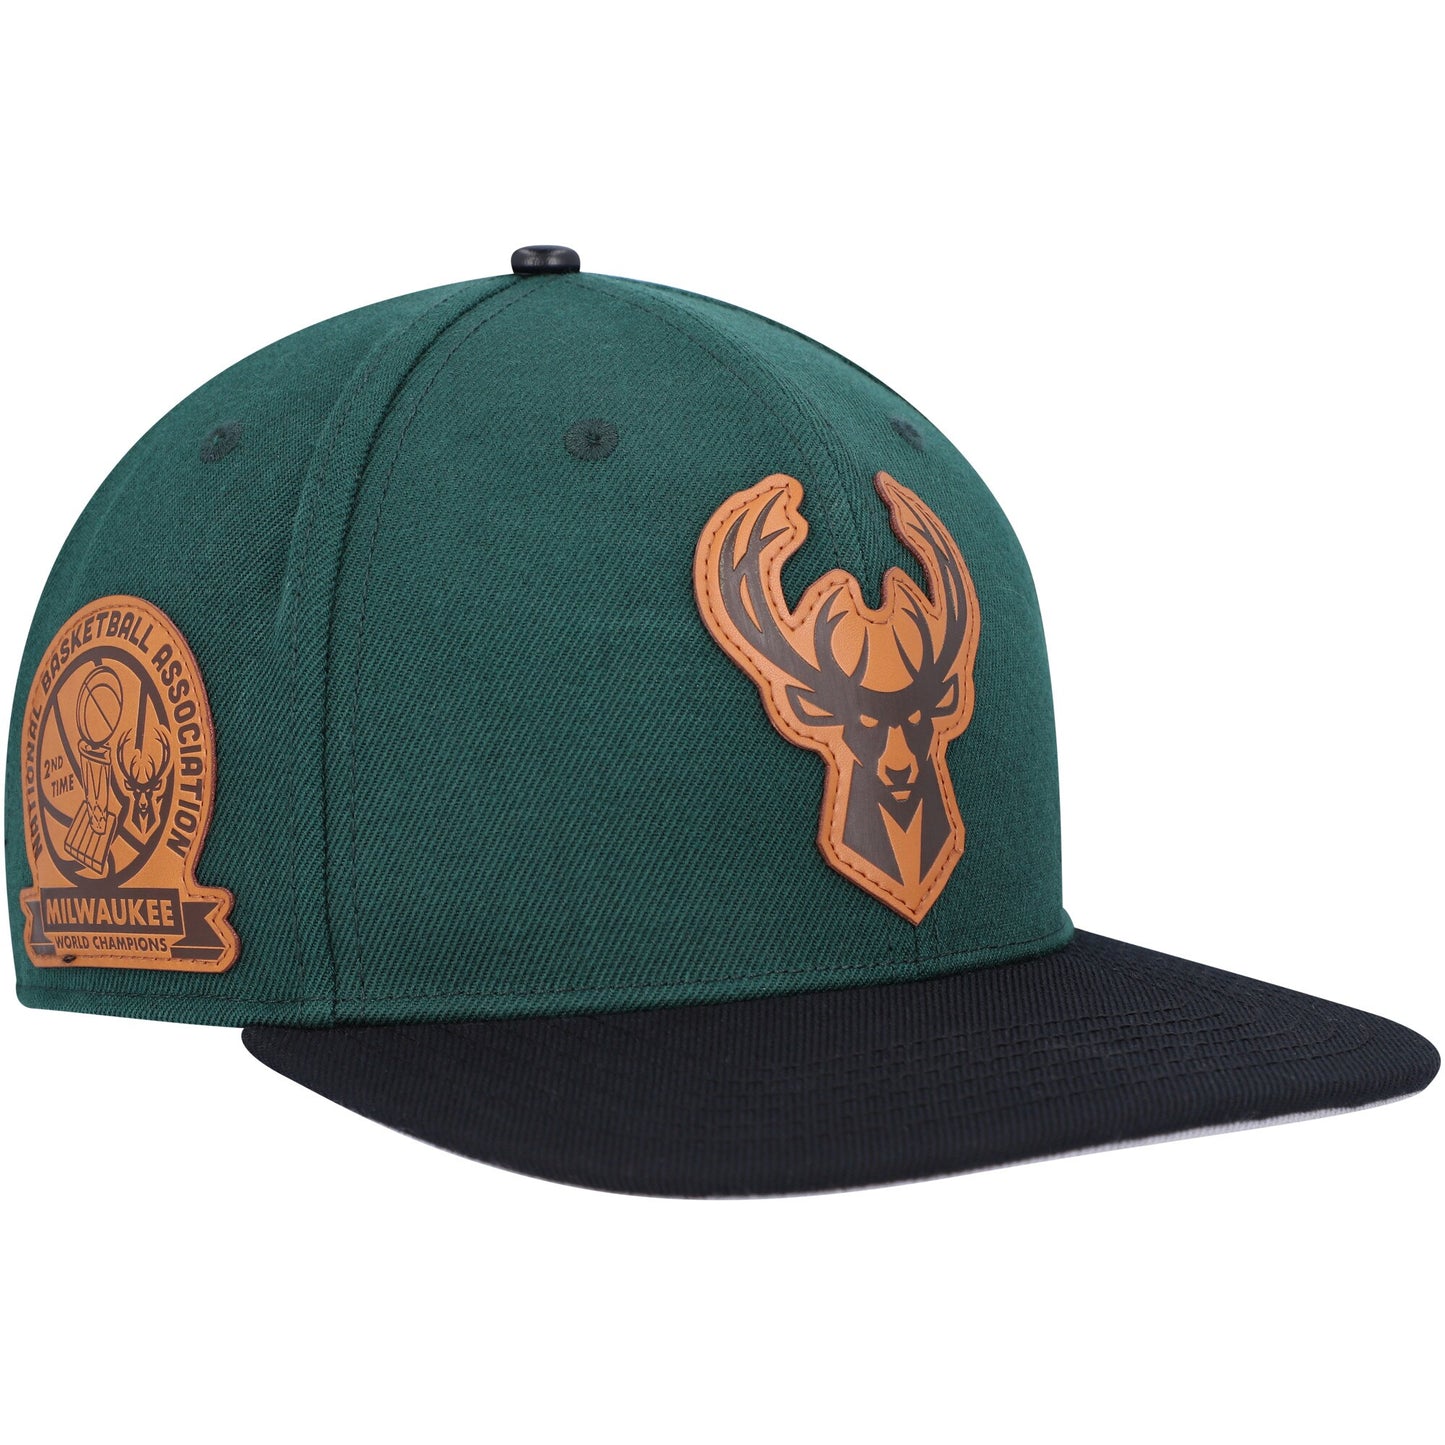 Milwaukee Bucks Pro Standard Heritage Leather Patch Snapback Hat - Hunter Green/Black